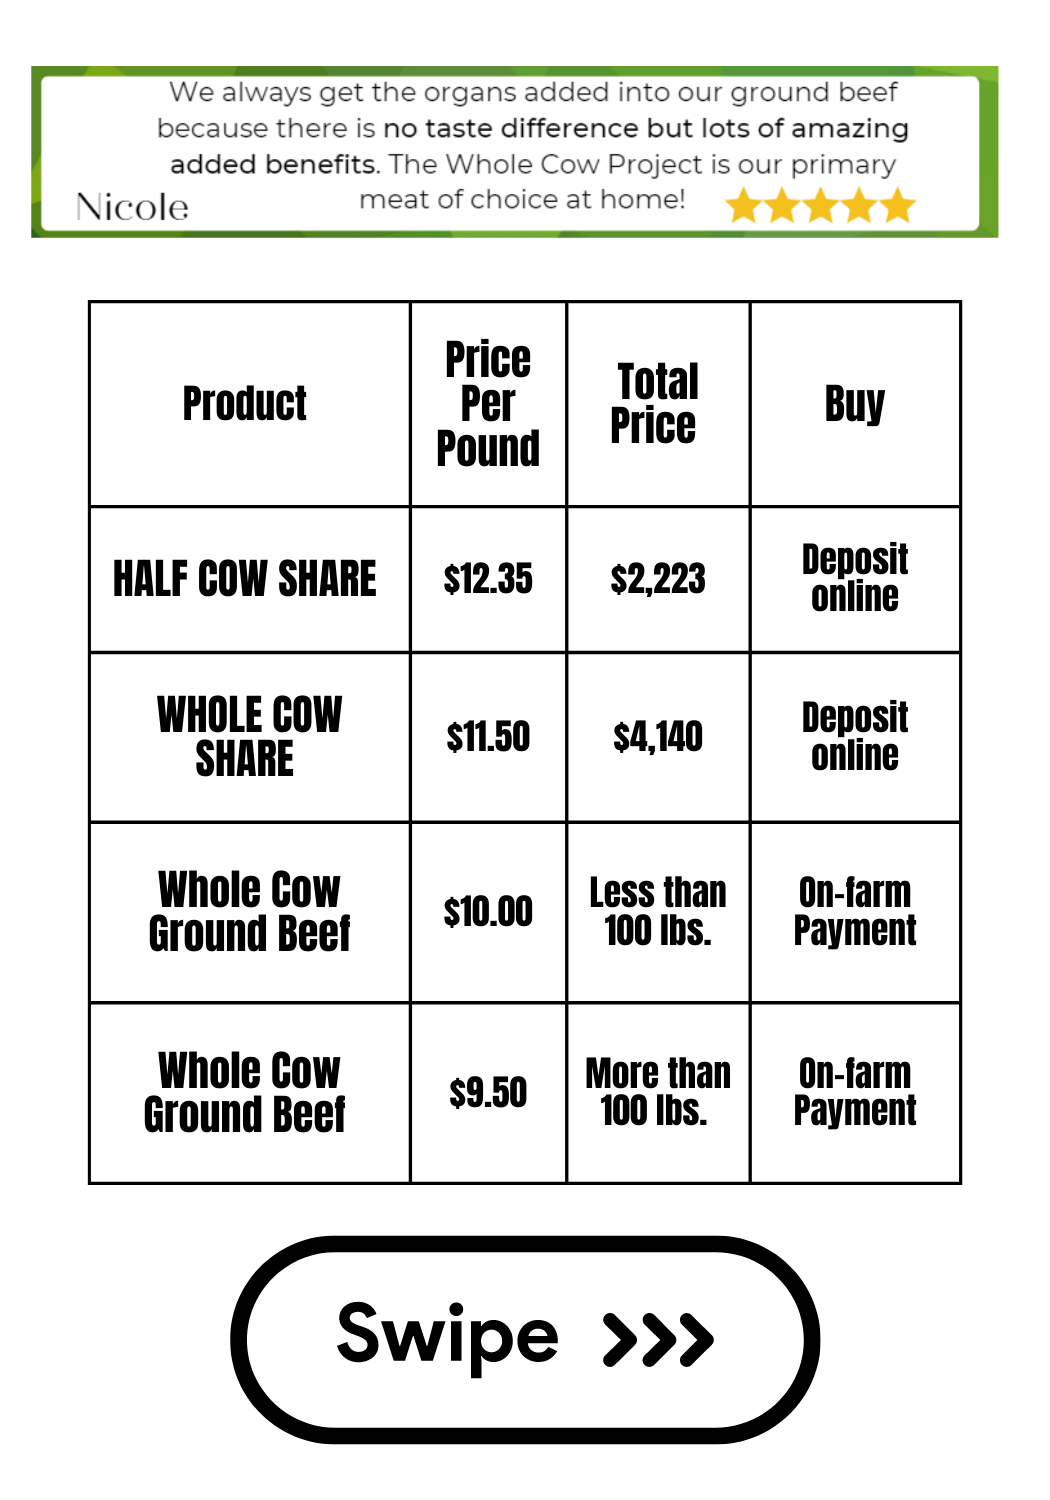 Whole Cow Deposit - $1600